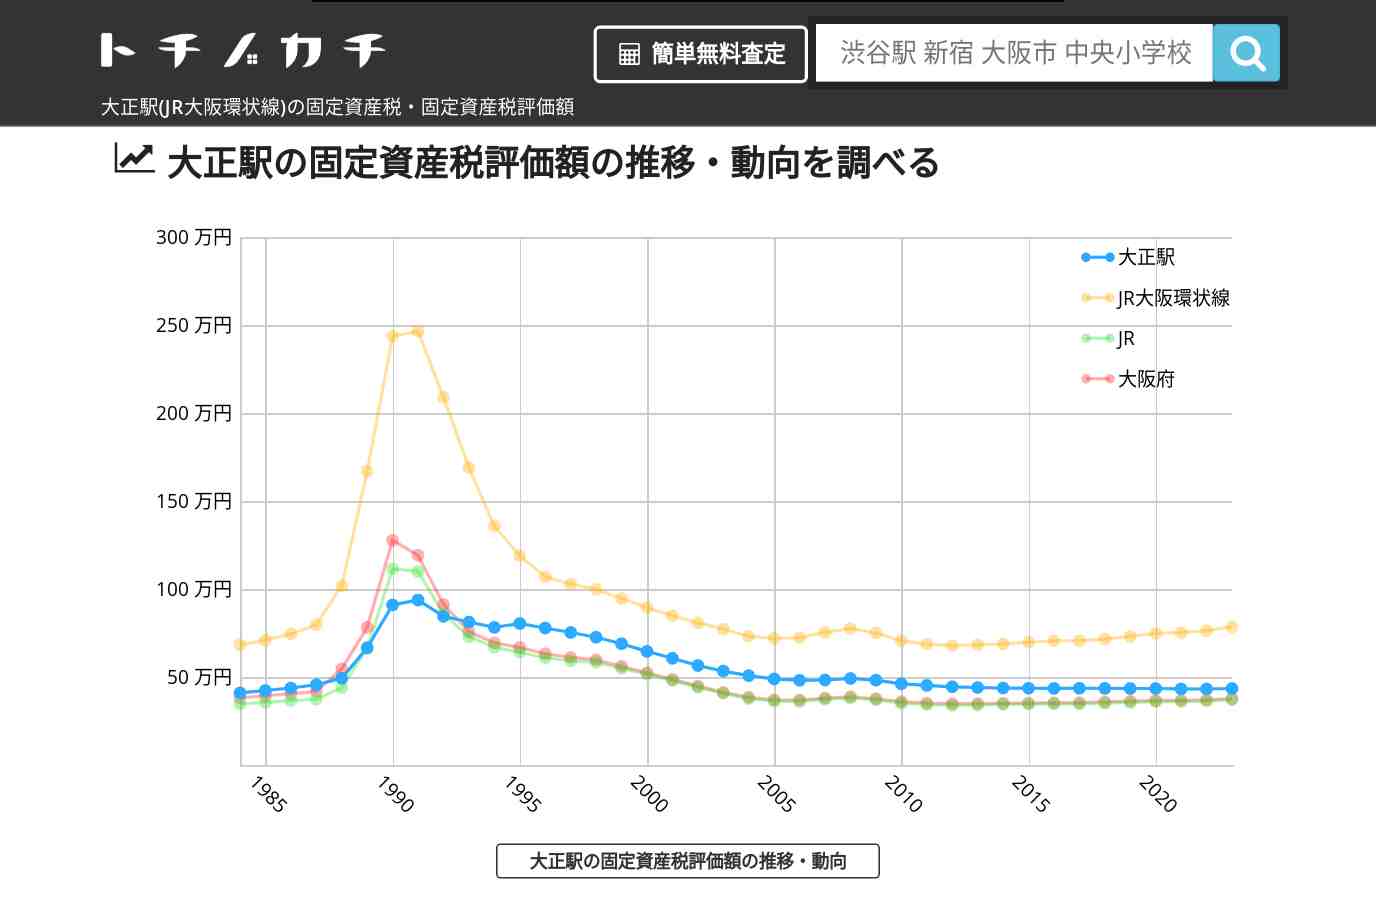 大正駅(JR大阪環状線)の固定資産税・固定資産税評価額 | トチノカチ